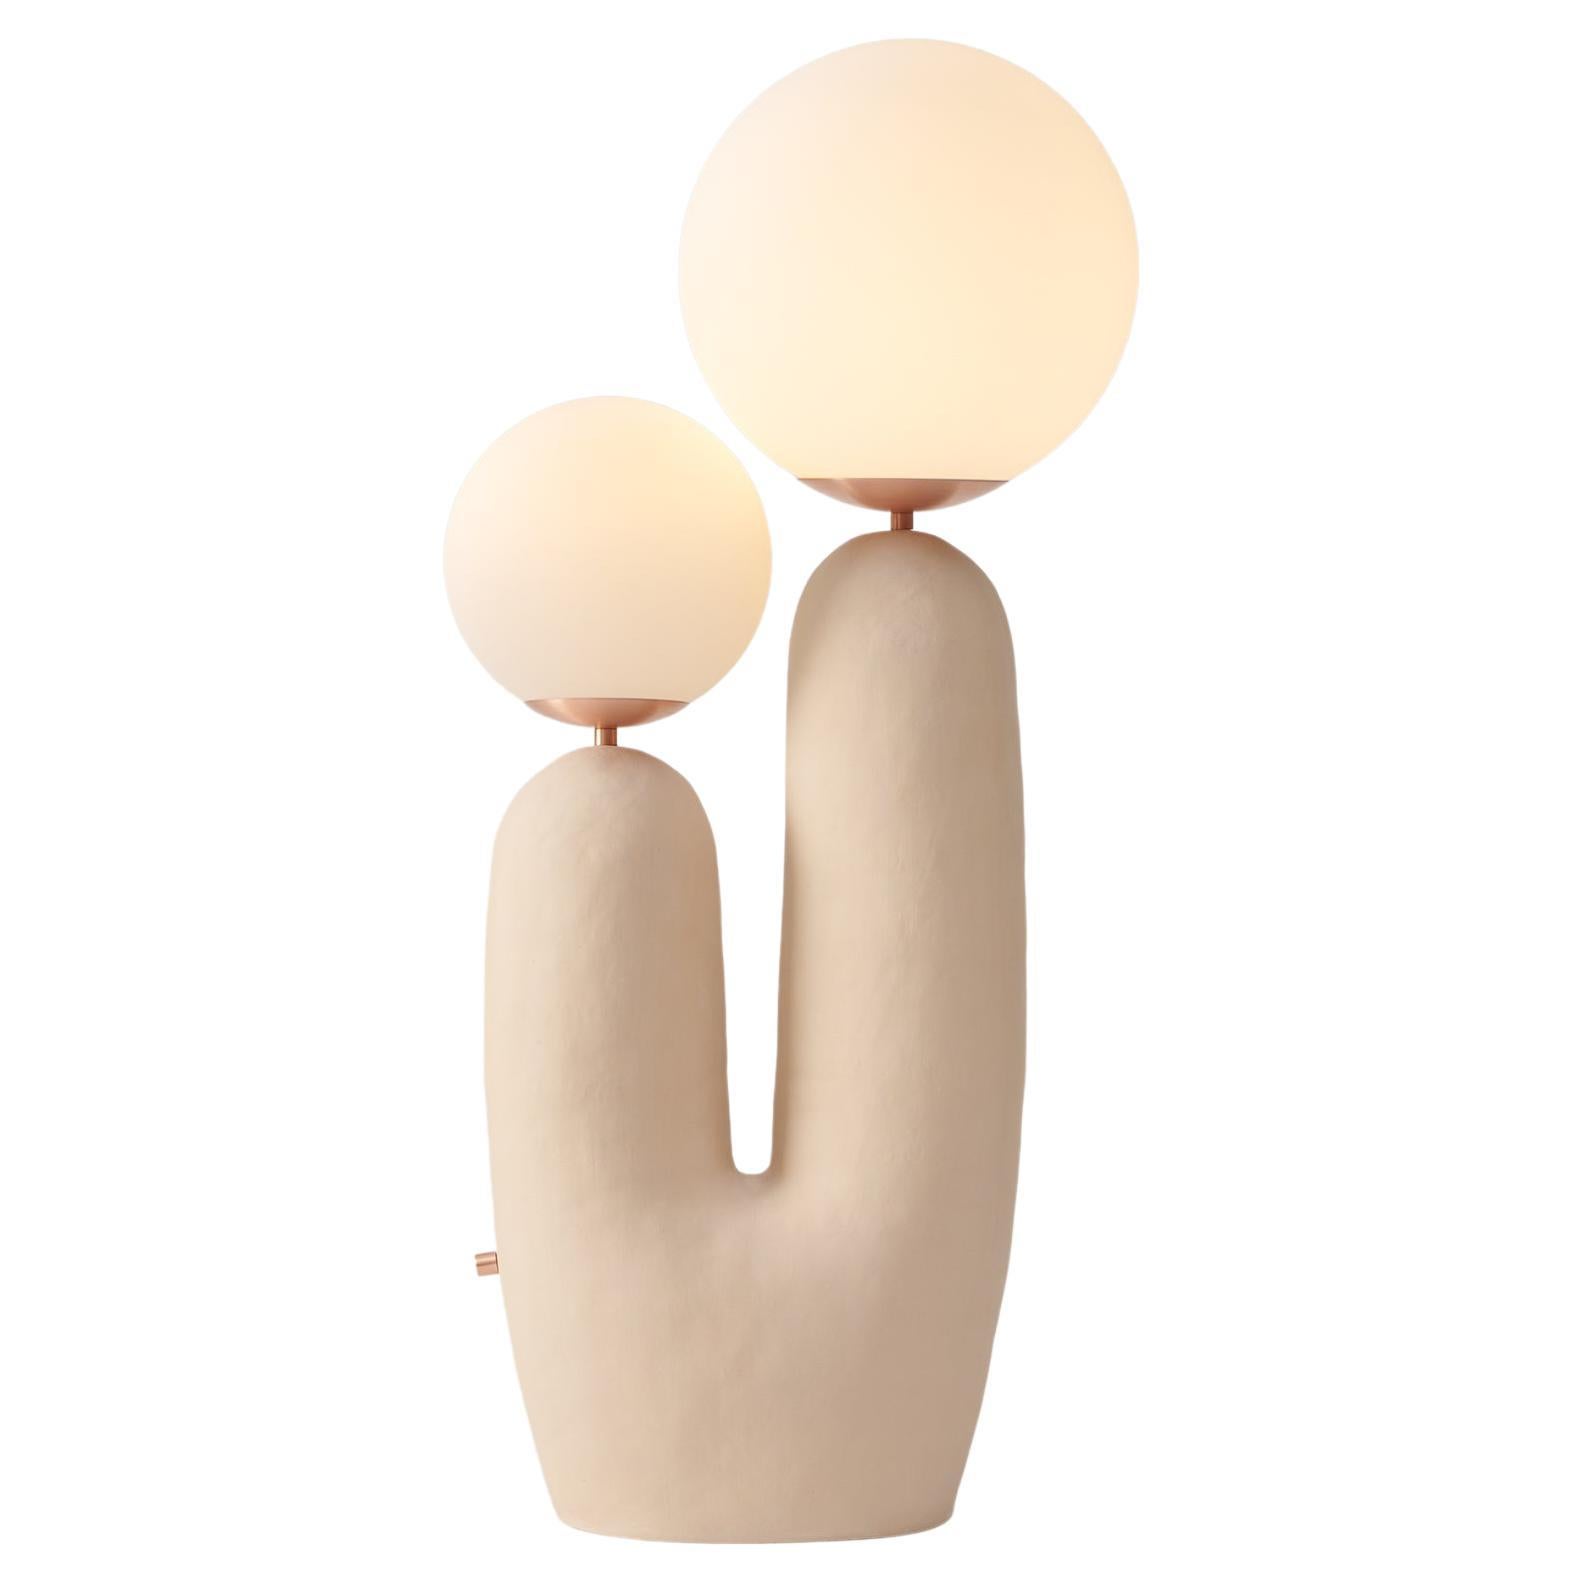 Contemporary Hand-Built Ceramic Base Oo Lamp - Skin Tone #1, Large